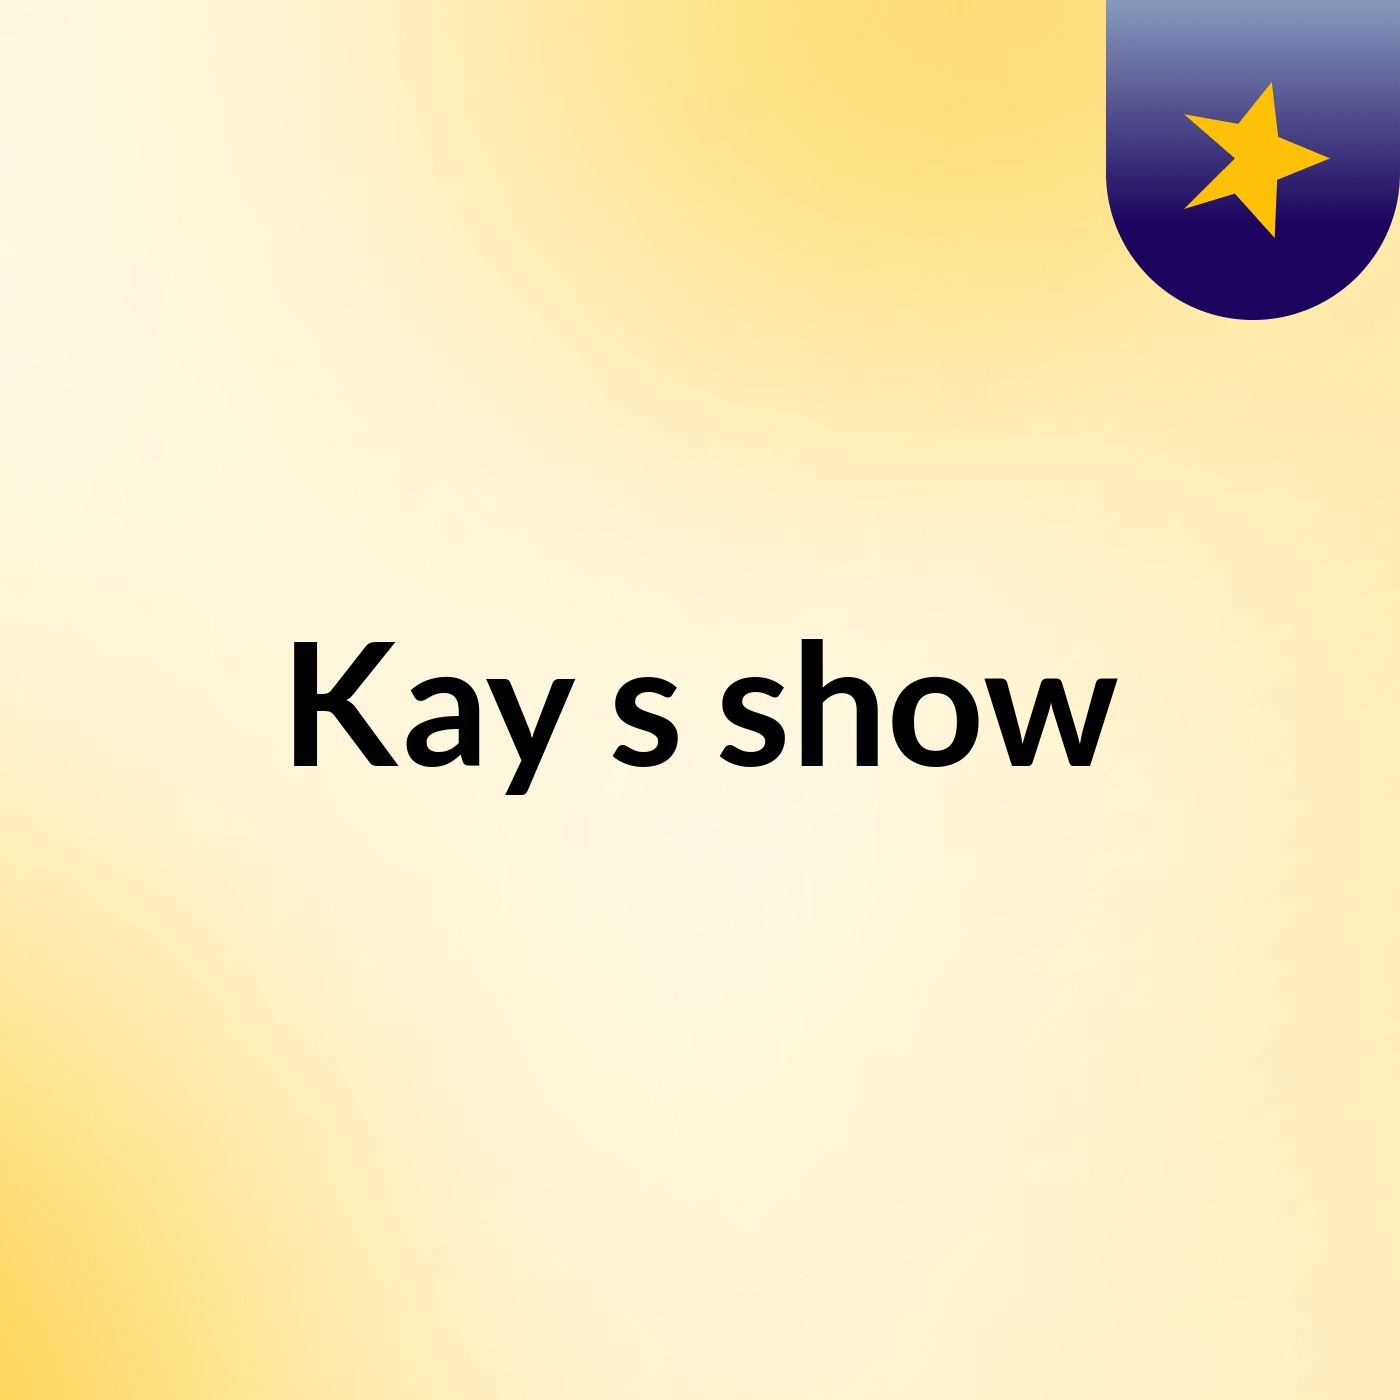 Episode 1 - p5 - Kay's show